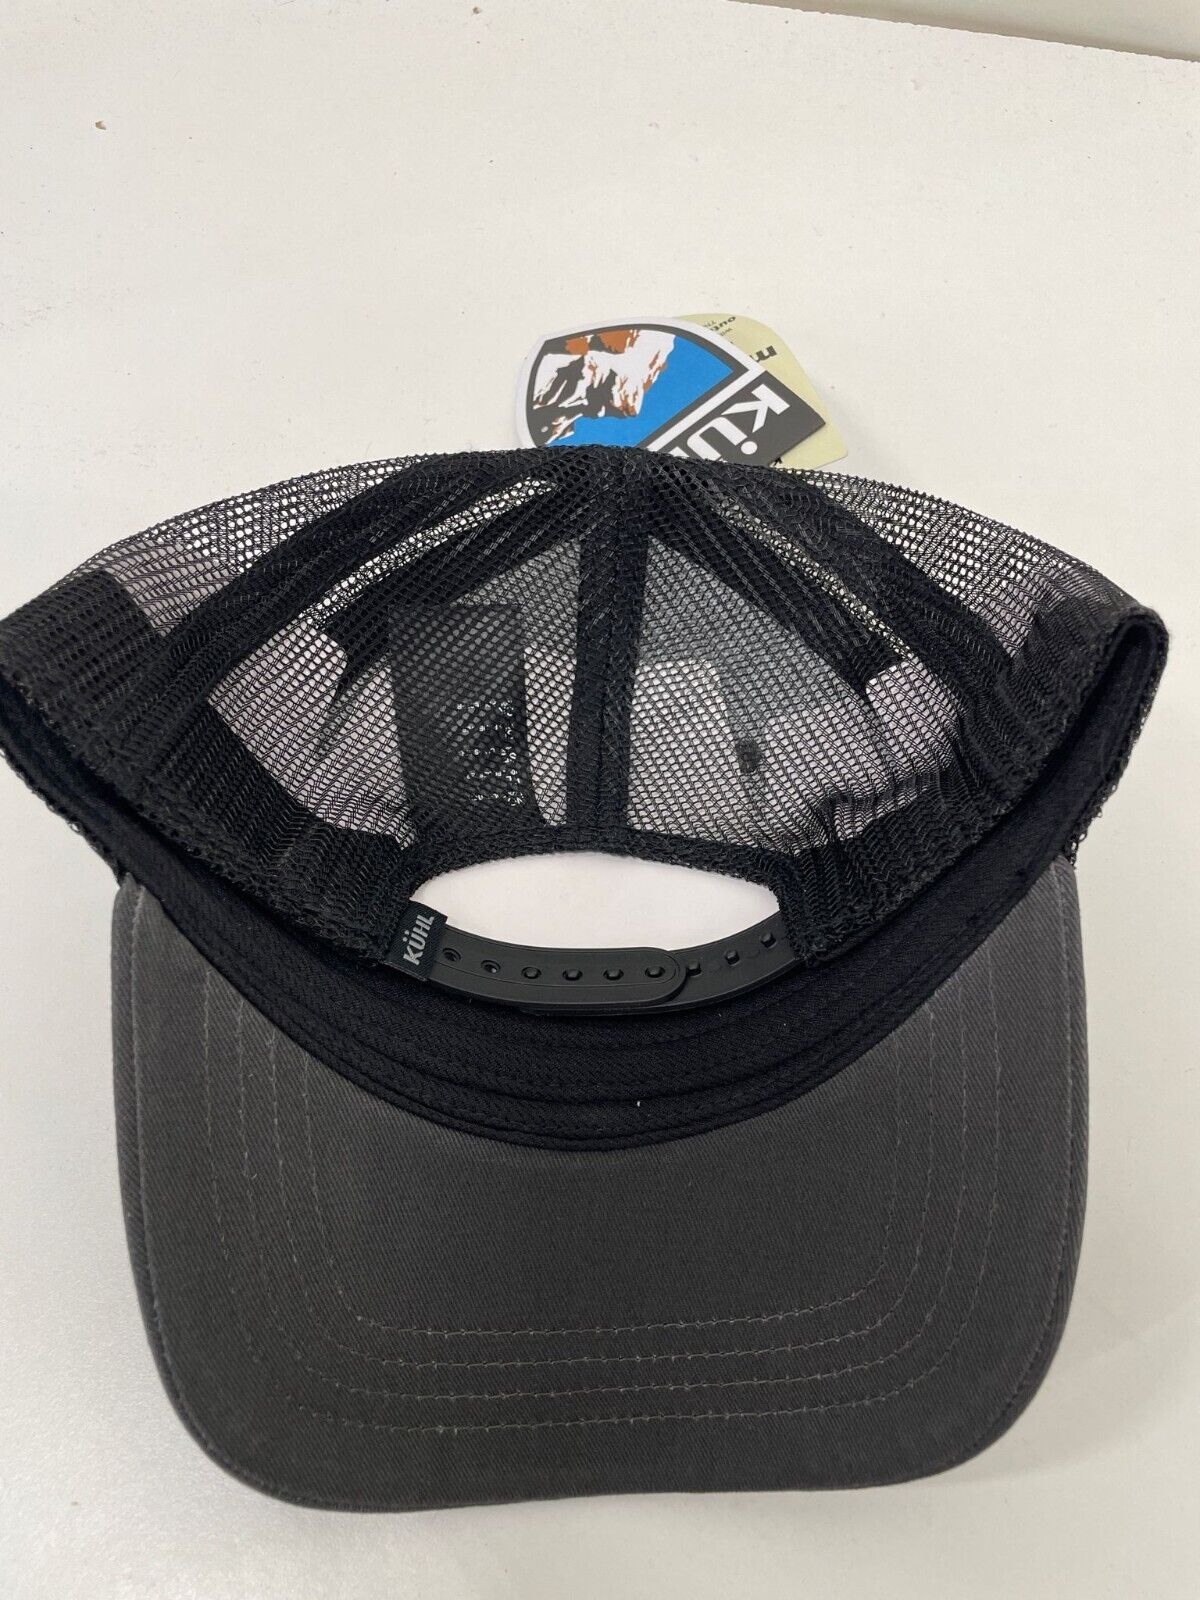 Kuhl Mens Adult Trucker Mesh Snapback Hat Cap Olive Green Carbon 830 One Size